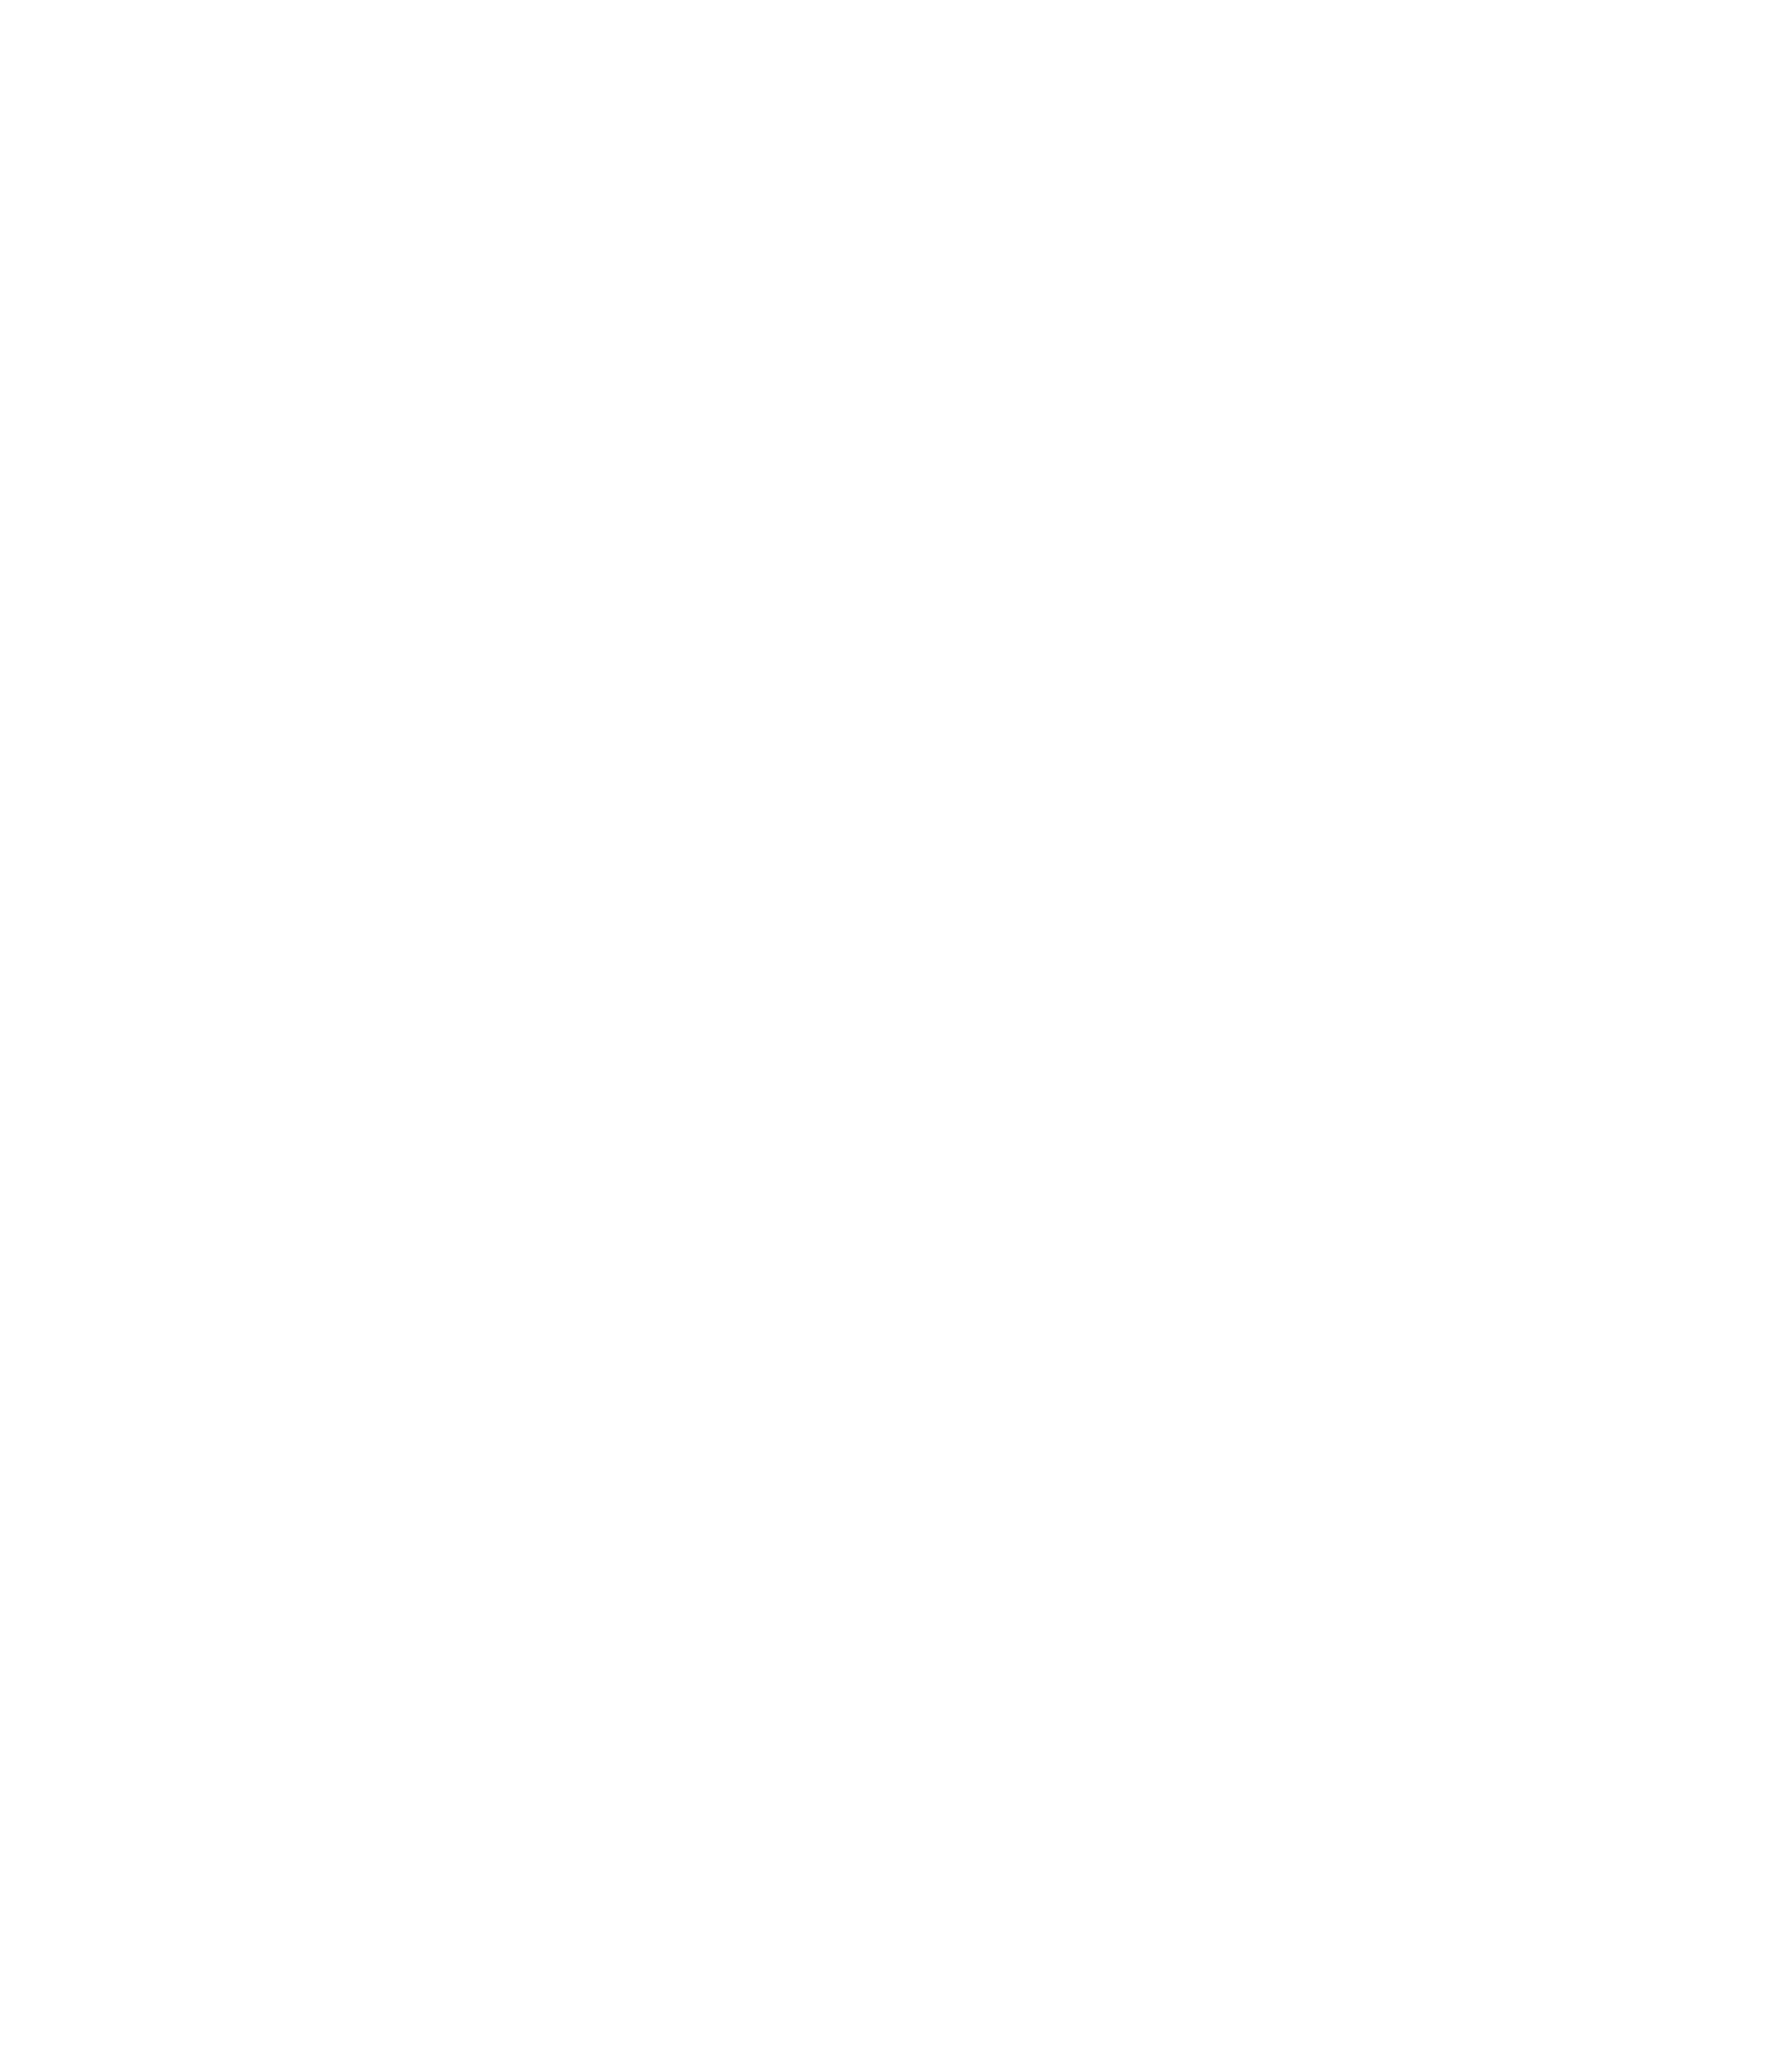 chewbacca icon